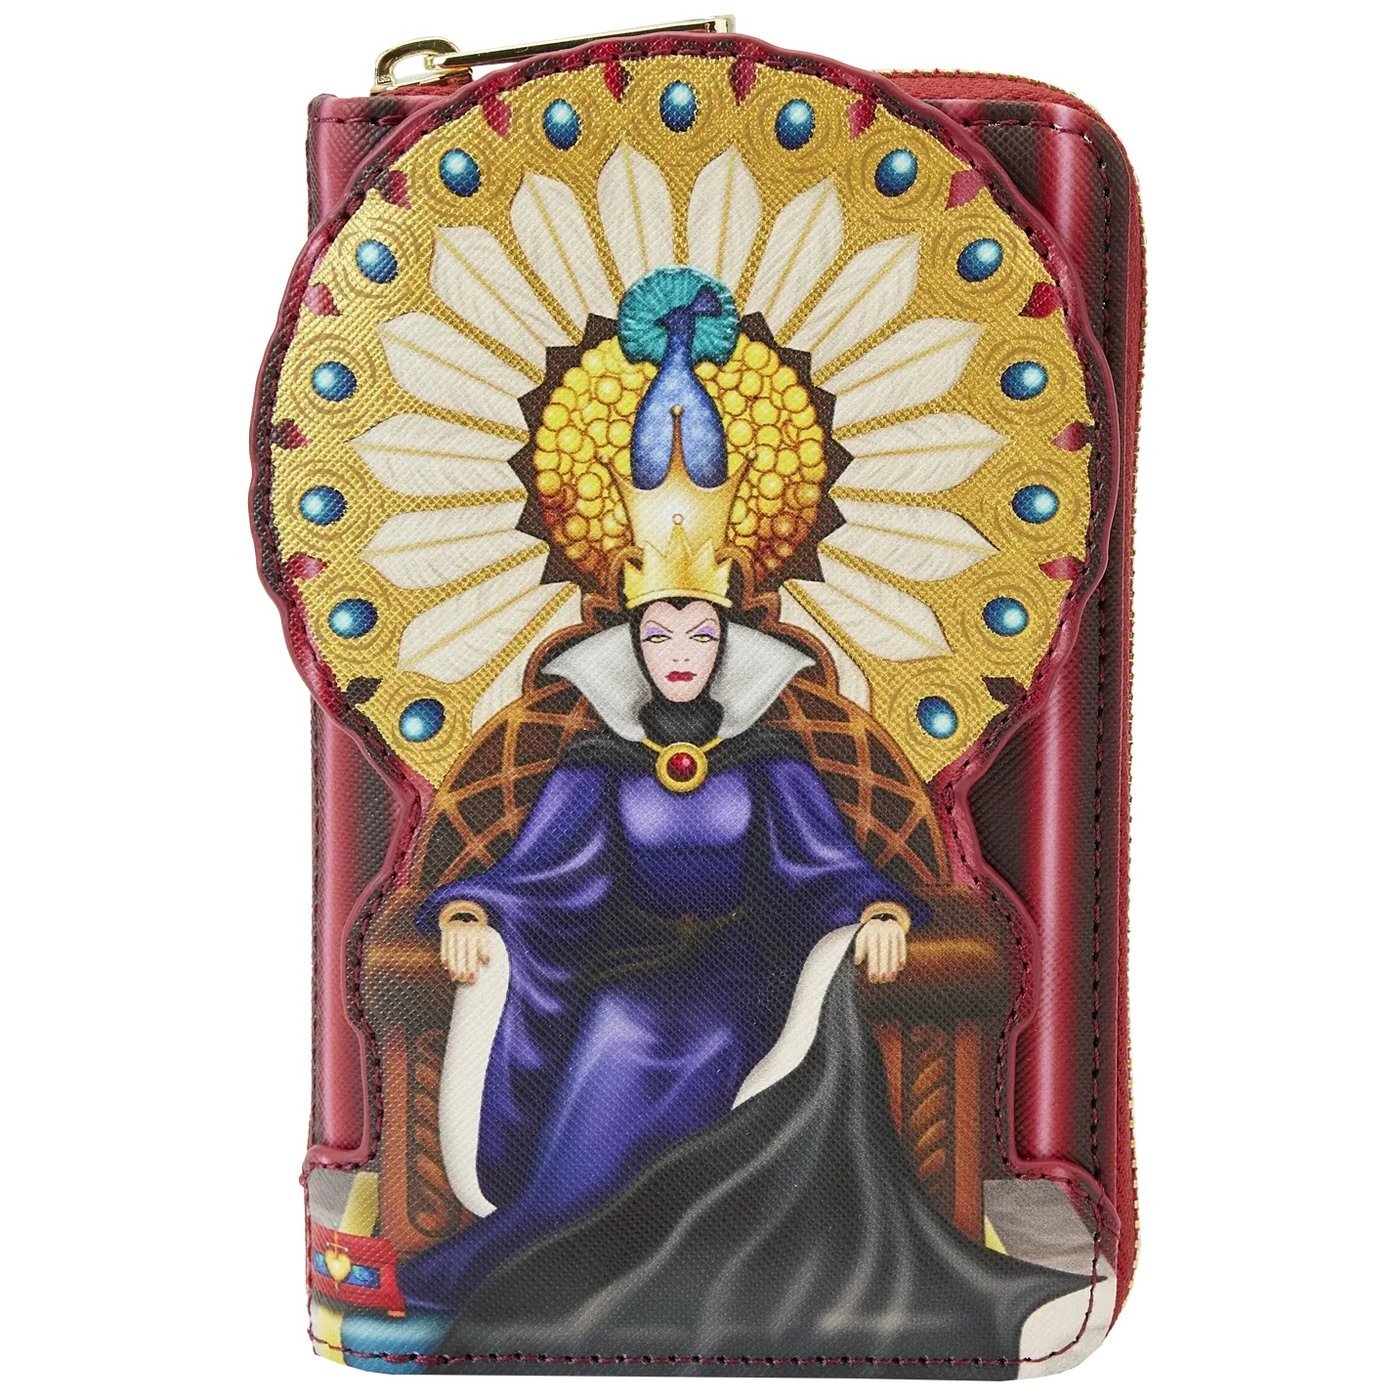 Snow White Evil Queen Throne